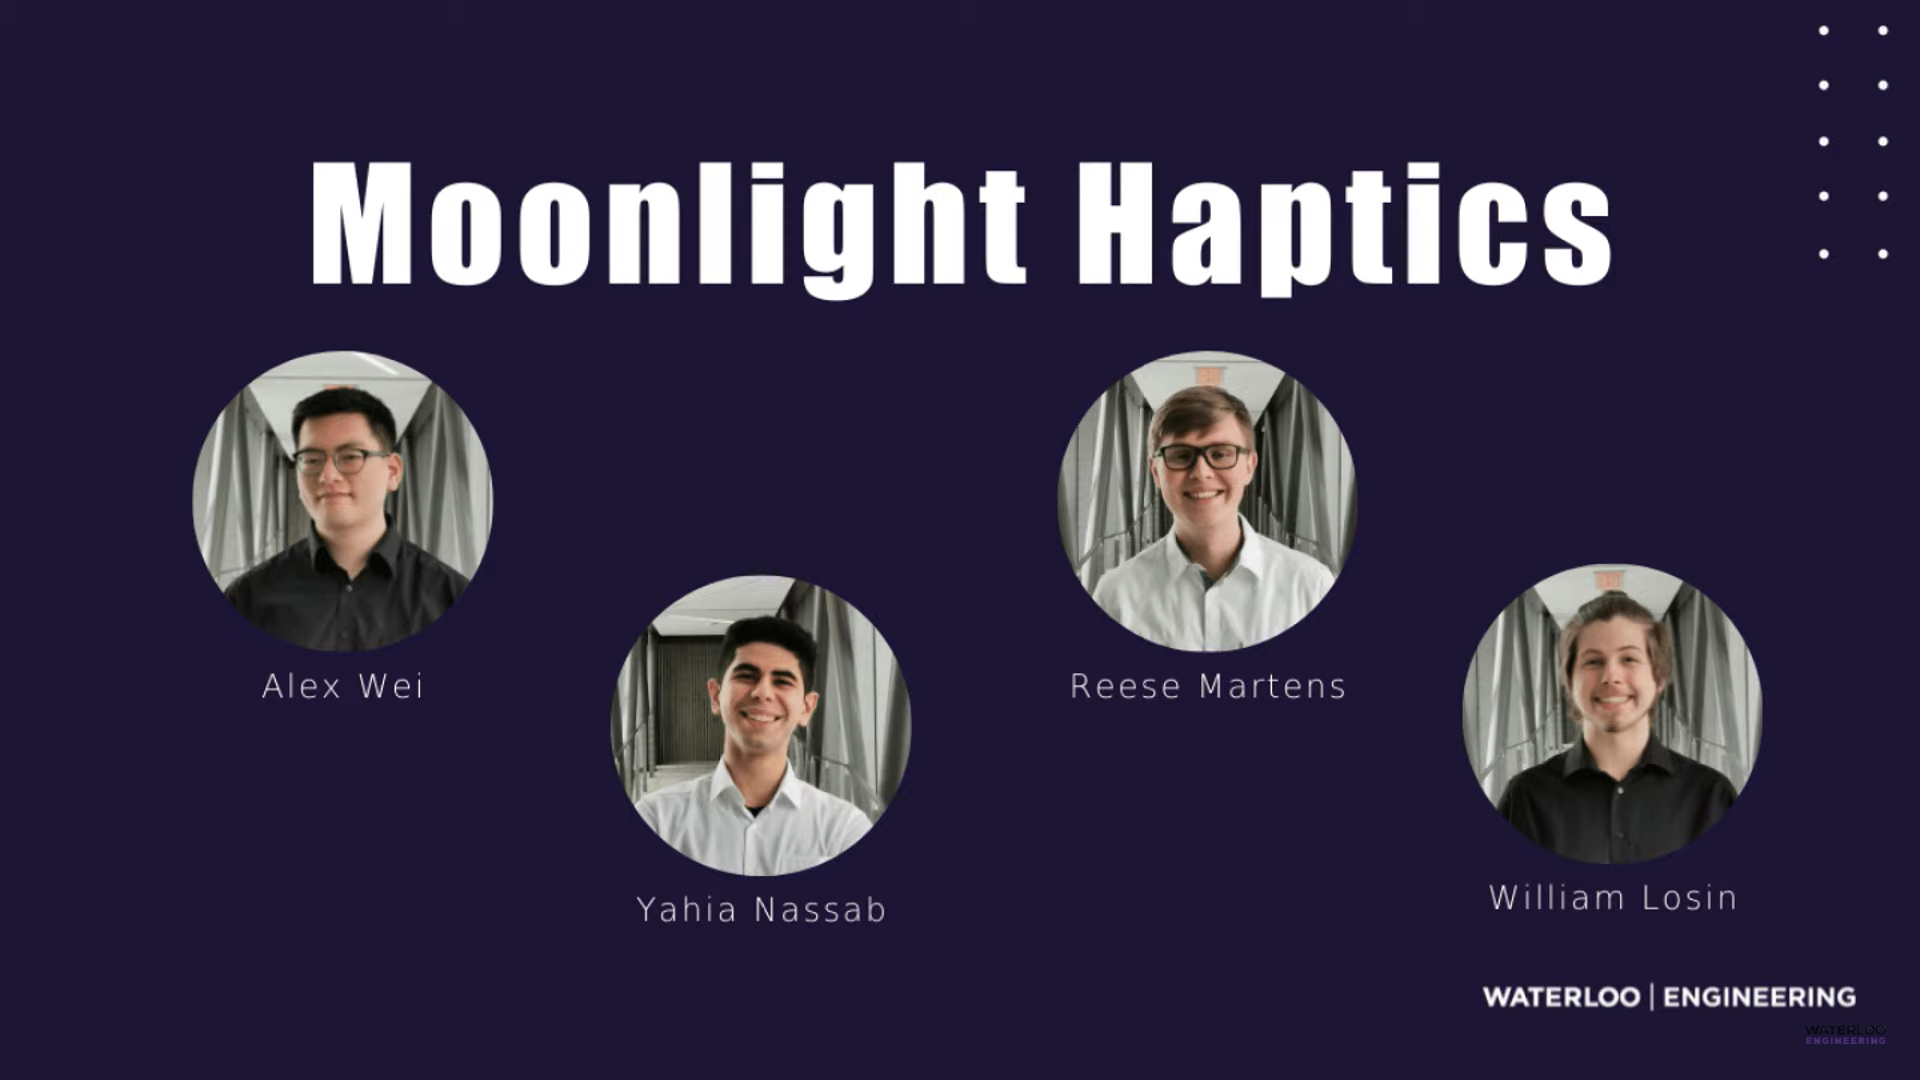 Team Moonlight Haptics